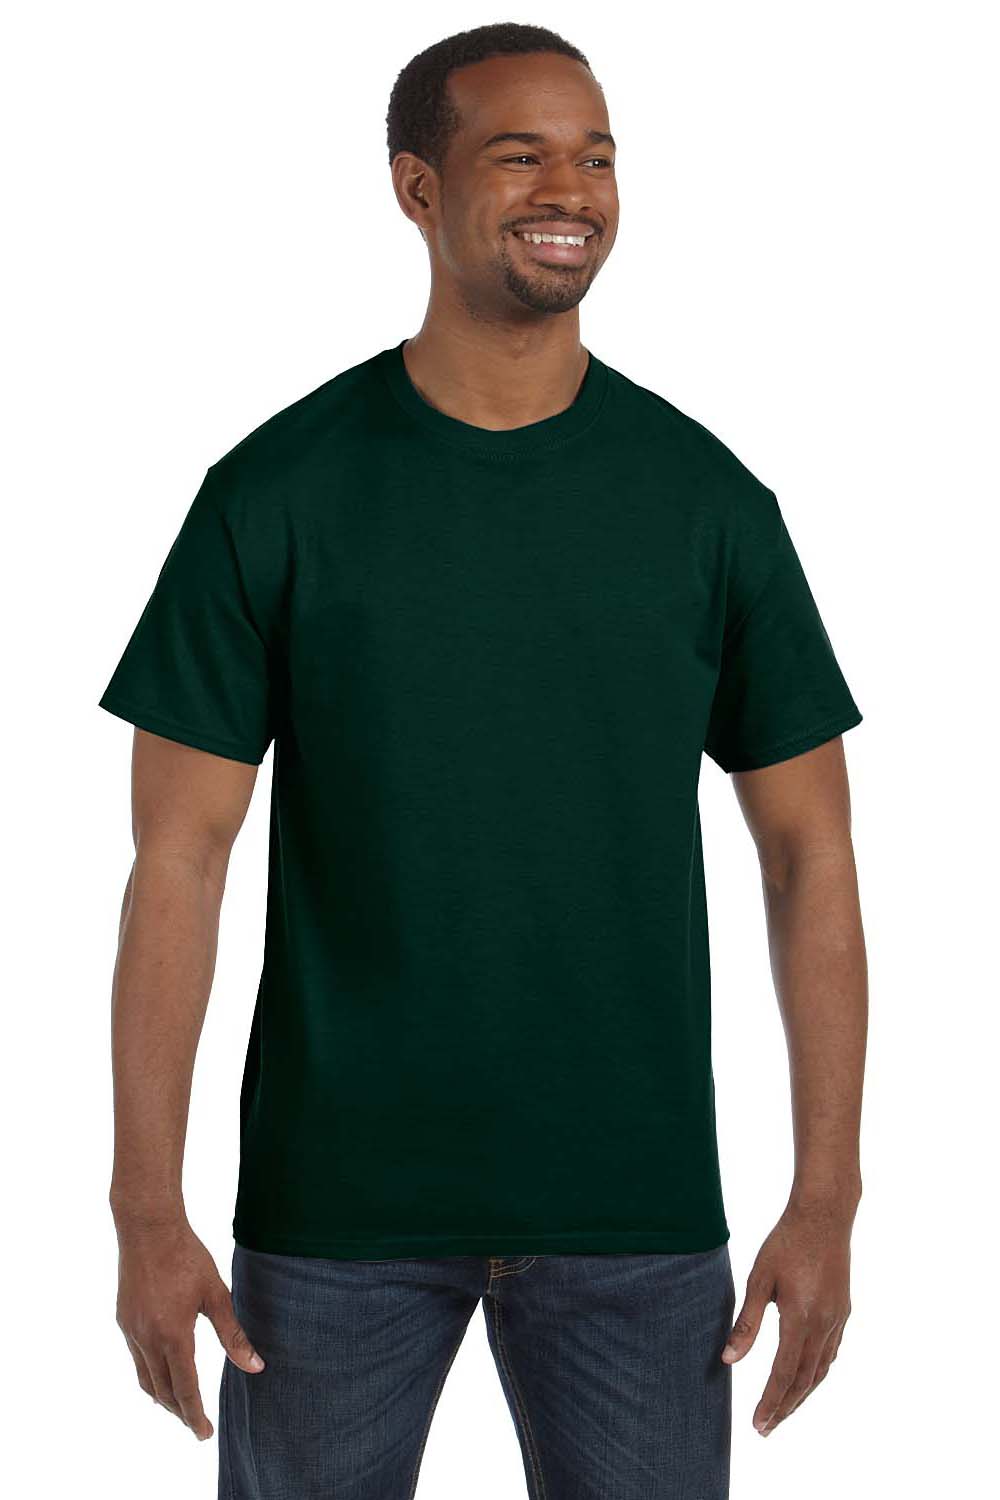 Hanes 5250T Mens ComfortSoft Short Sleeve Crewneck T-Shirt Forest Green Front